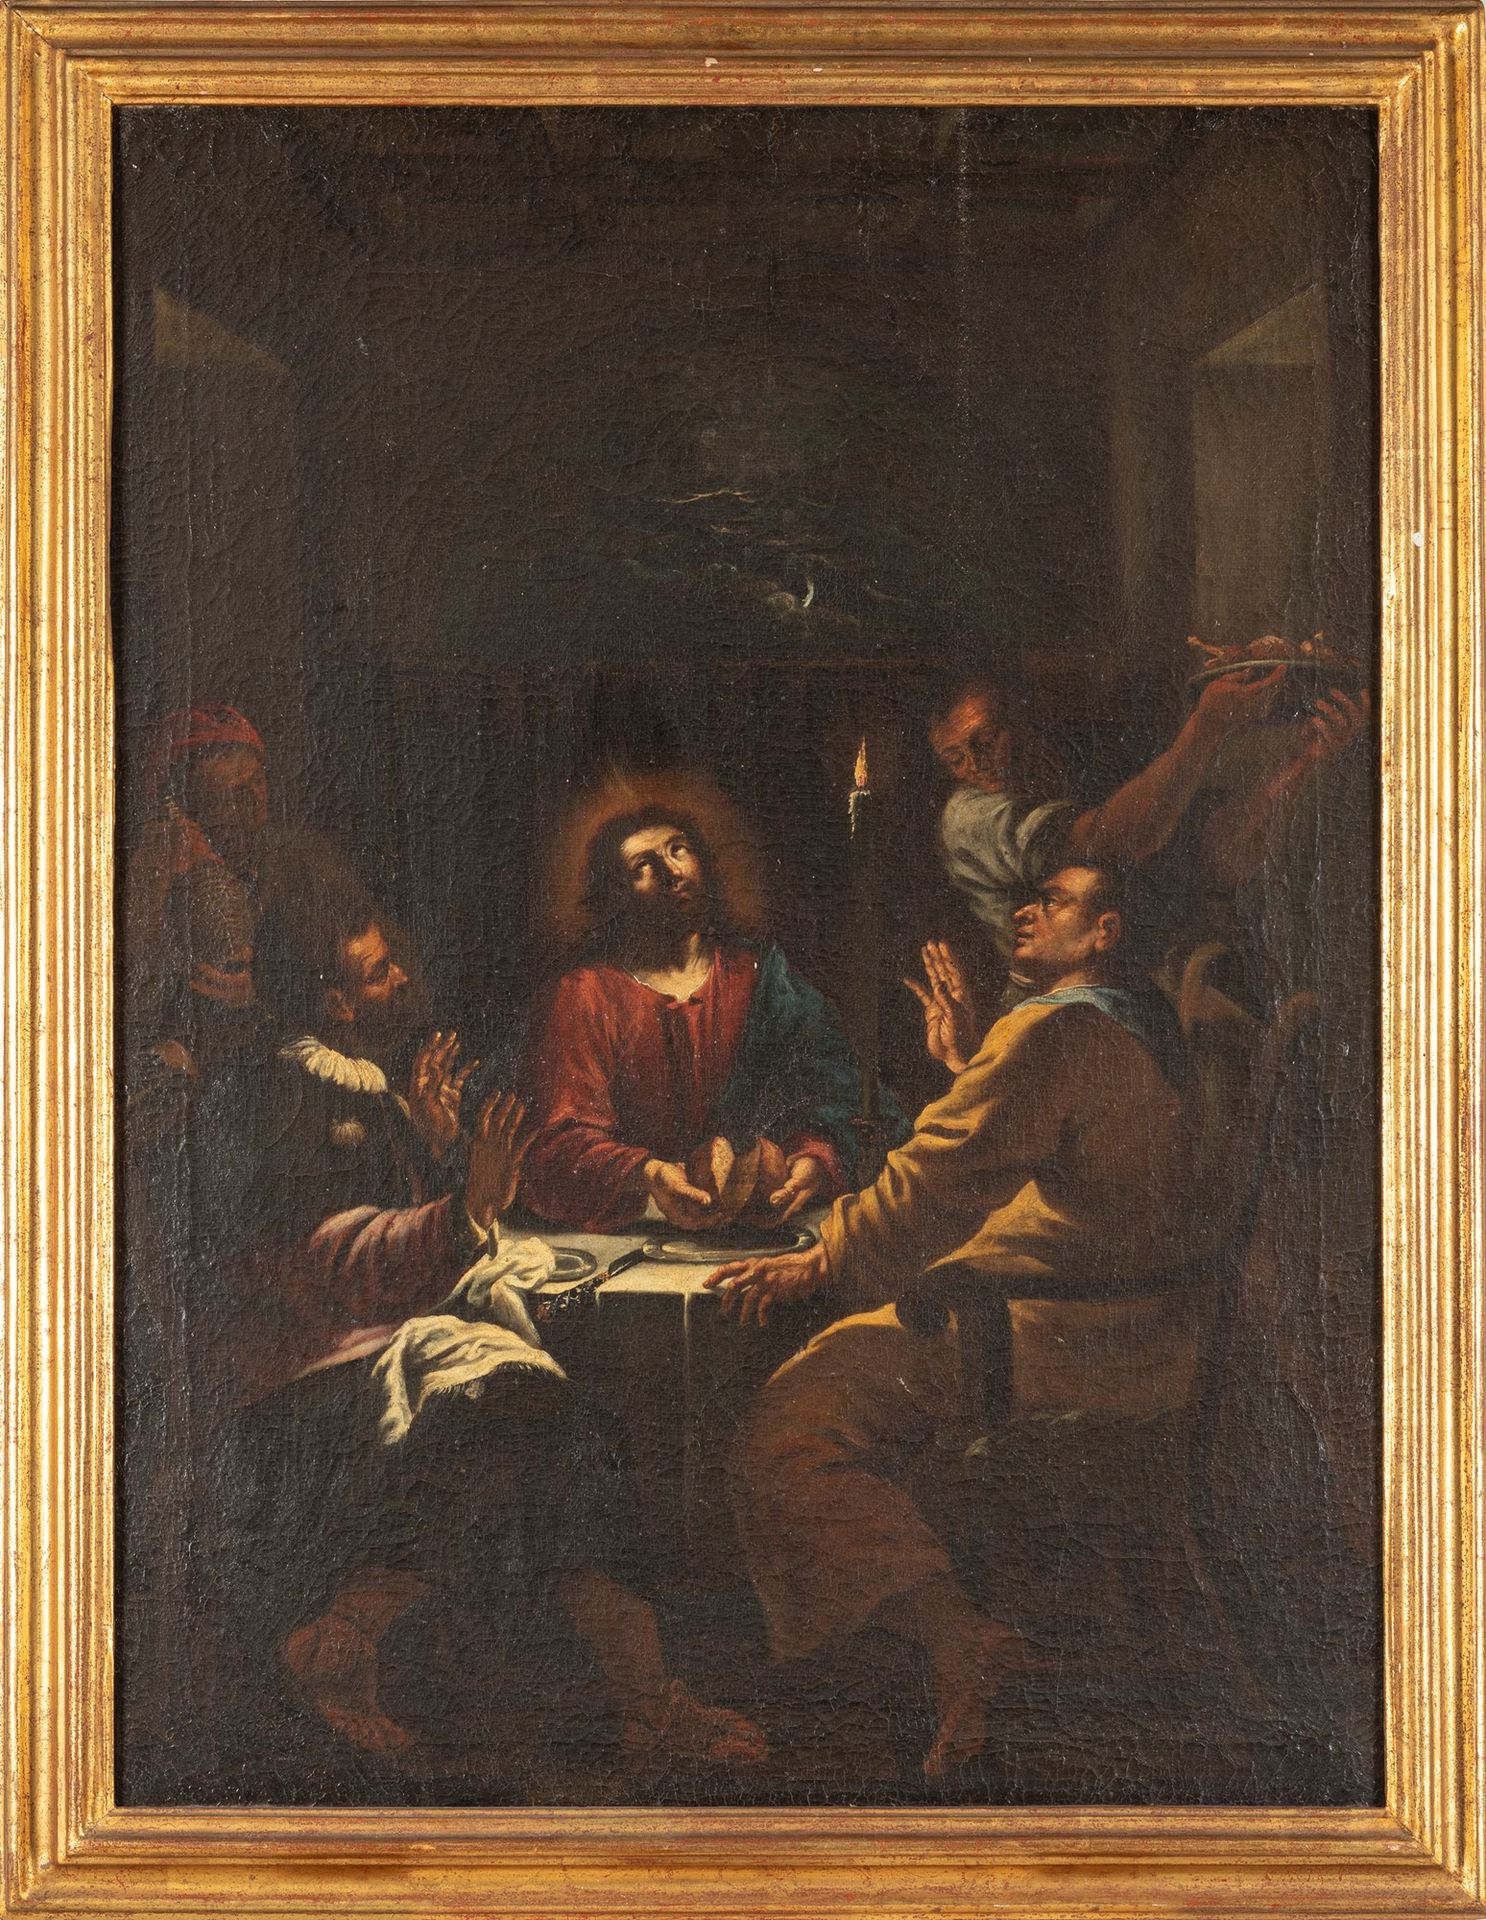 Scuola veneta, secolo XVII Cena en Emaús

óleo sobre lienzo 
95,5 x 71 cm